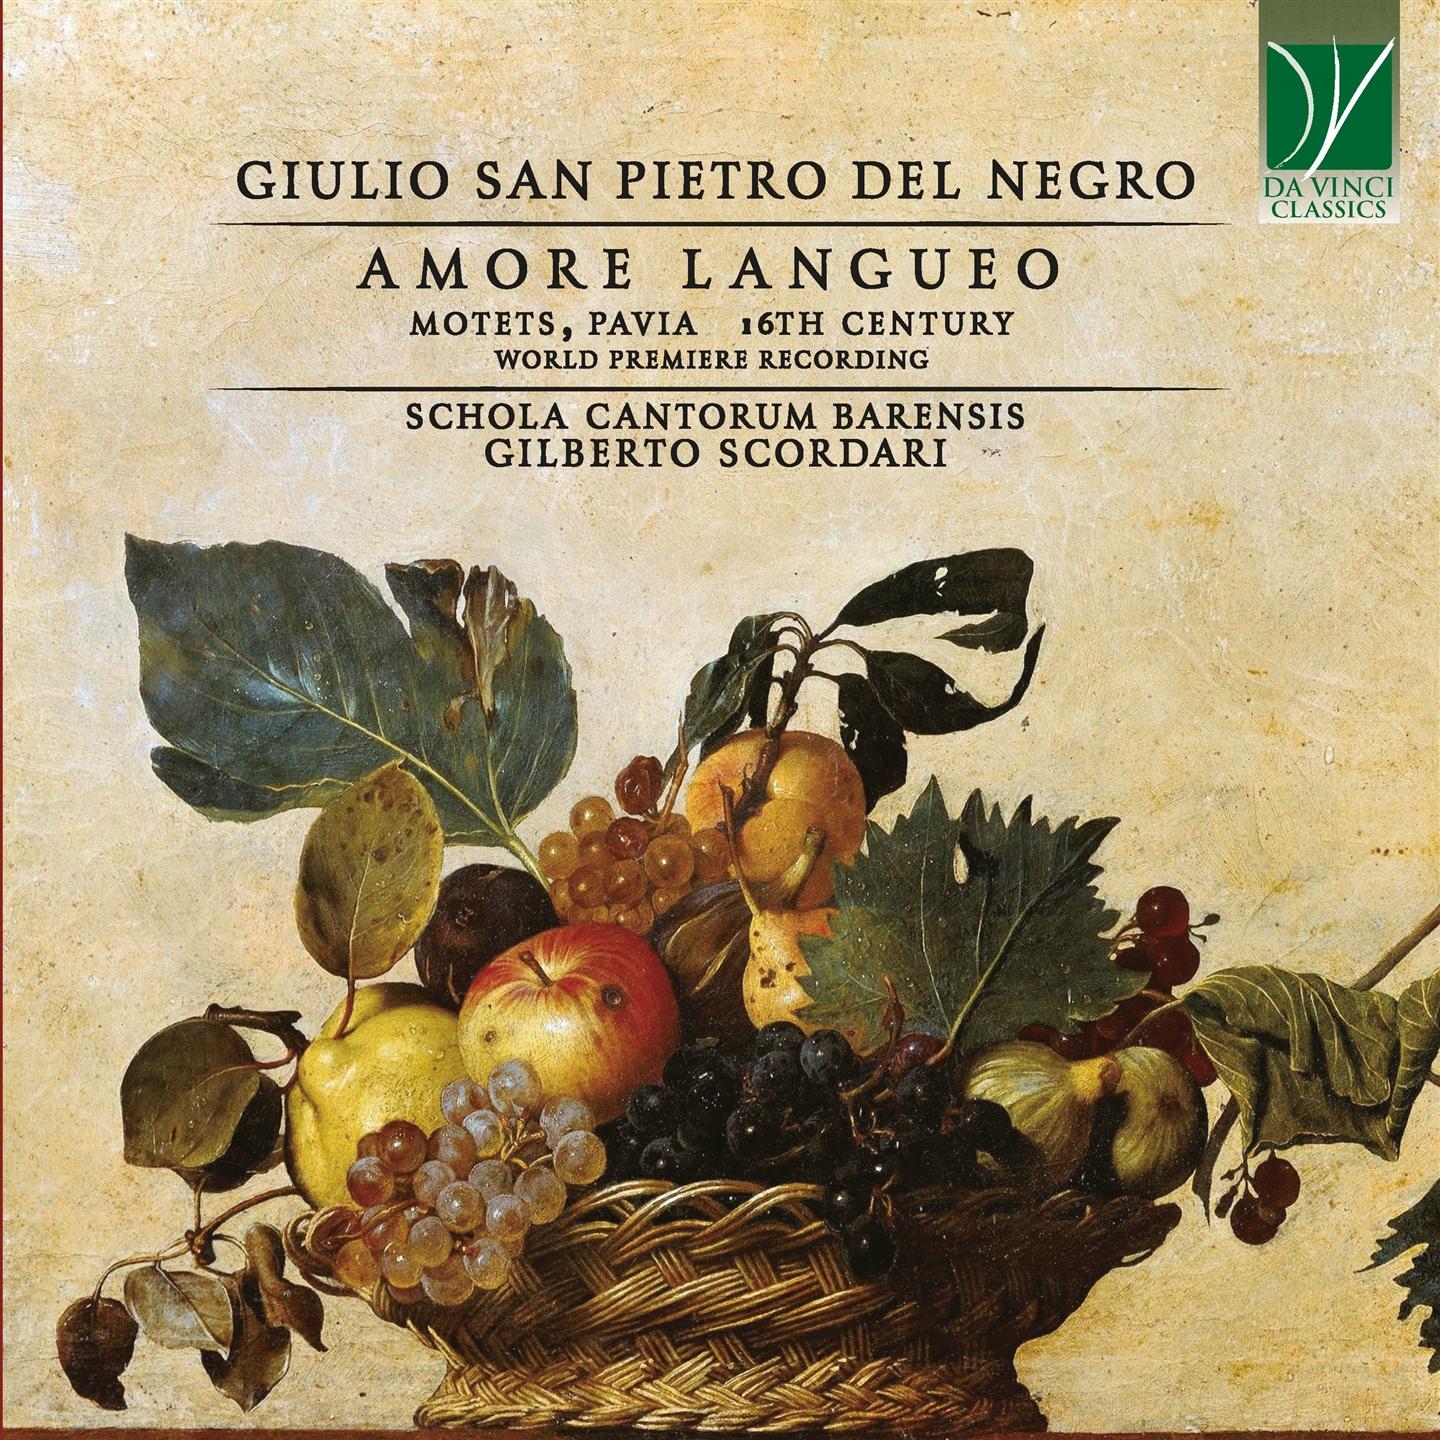 GIULIO SAN PIETRO DEL NEGRO: AMORE LANGUEO, MOTETS, PAVIA, 16TH CENTURY [WORLD